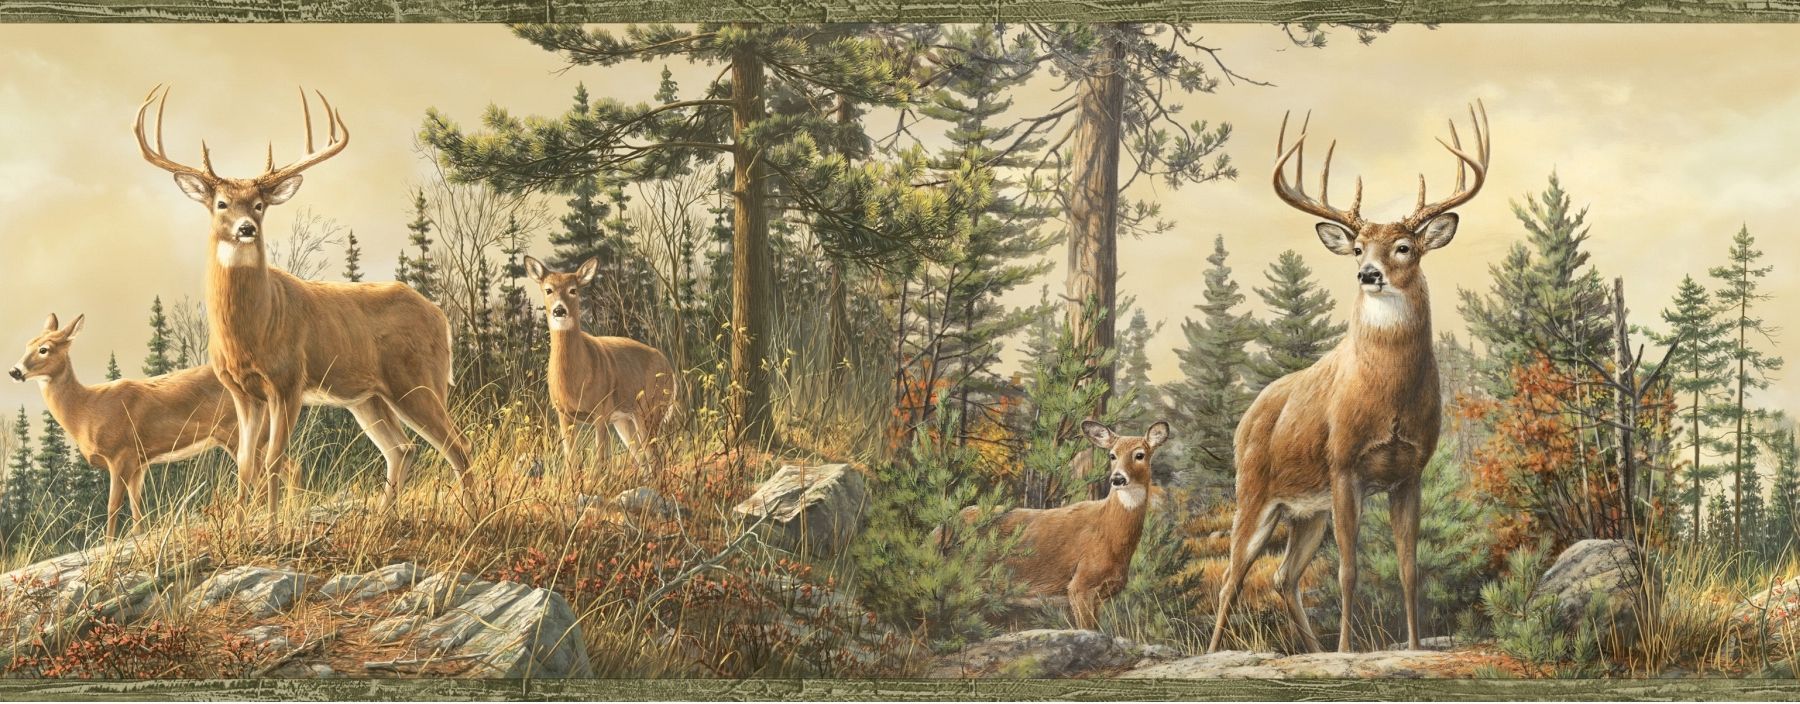 Deer Hd Wallpapers Backgrounds Wallpaper - Deer Wallpaper Border - 1800x704  Wallpaper 